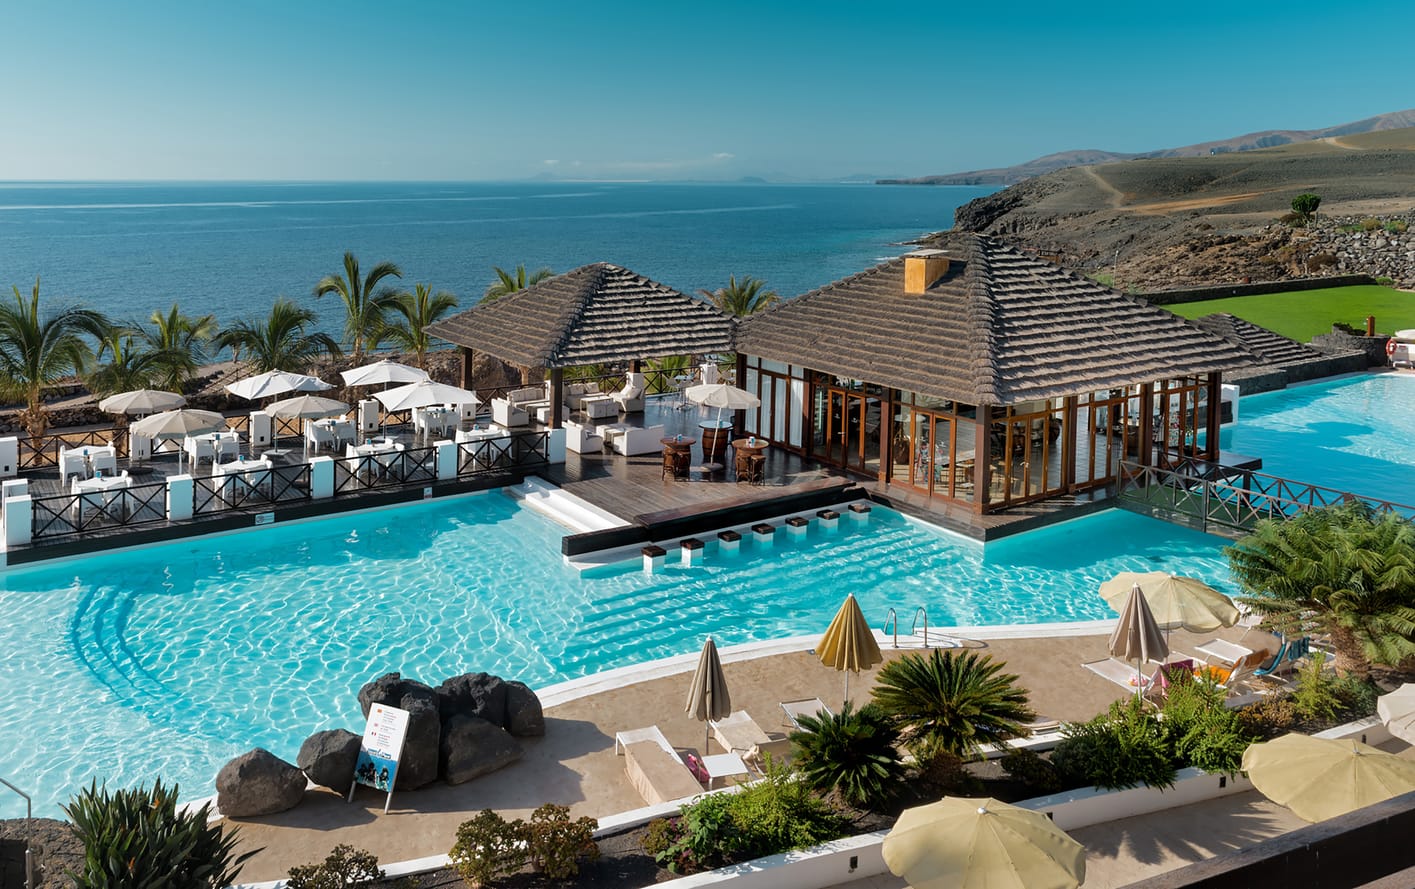 Secrets Lanzarote Resort & Spa, best all-inclusive hotels in lanzarote